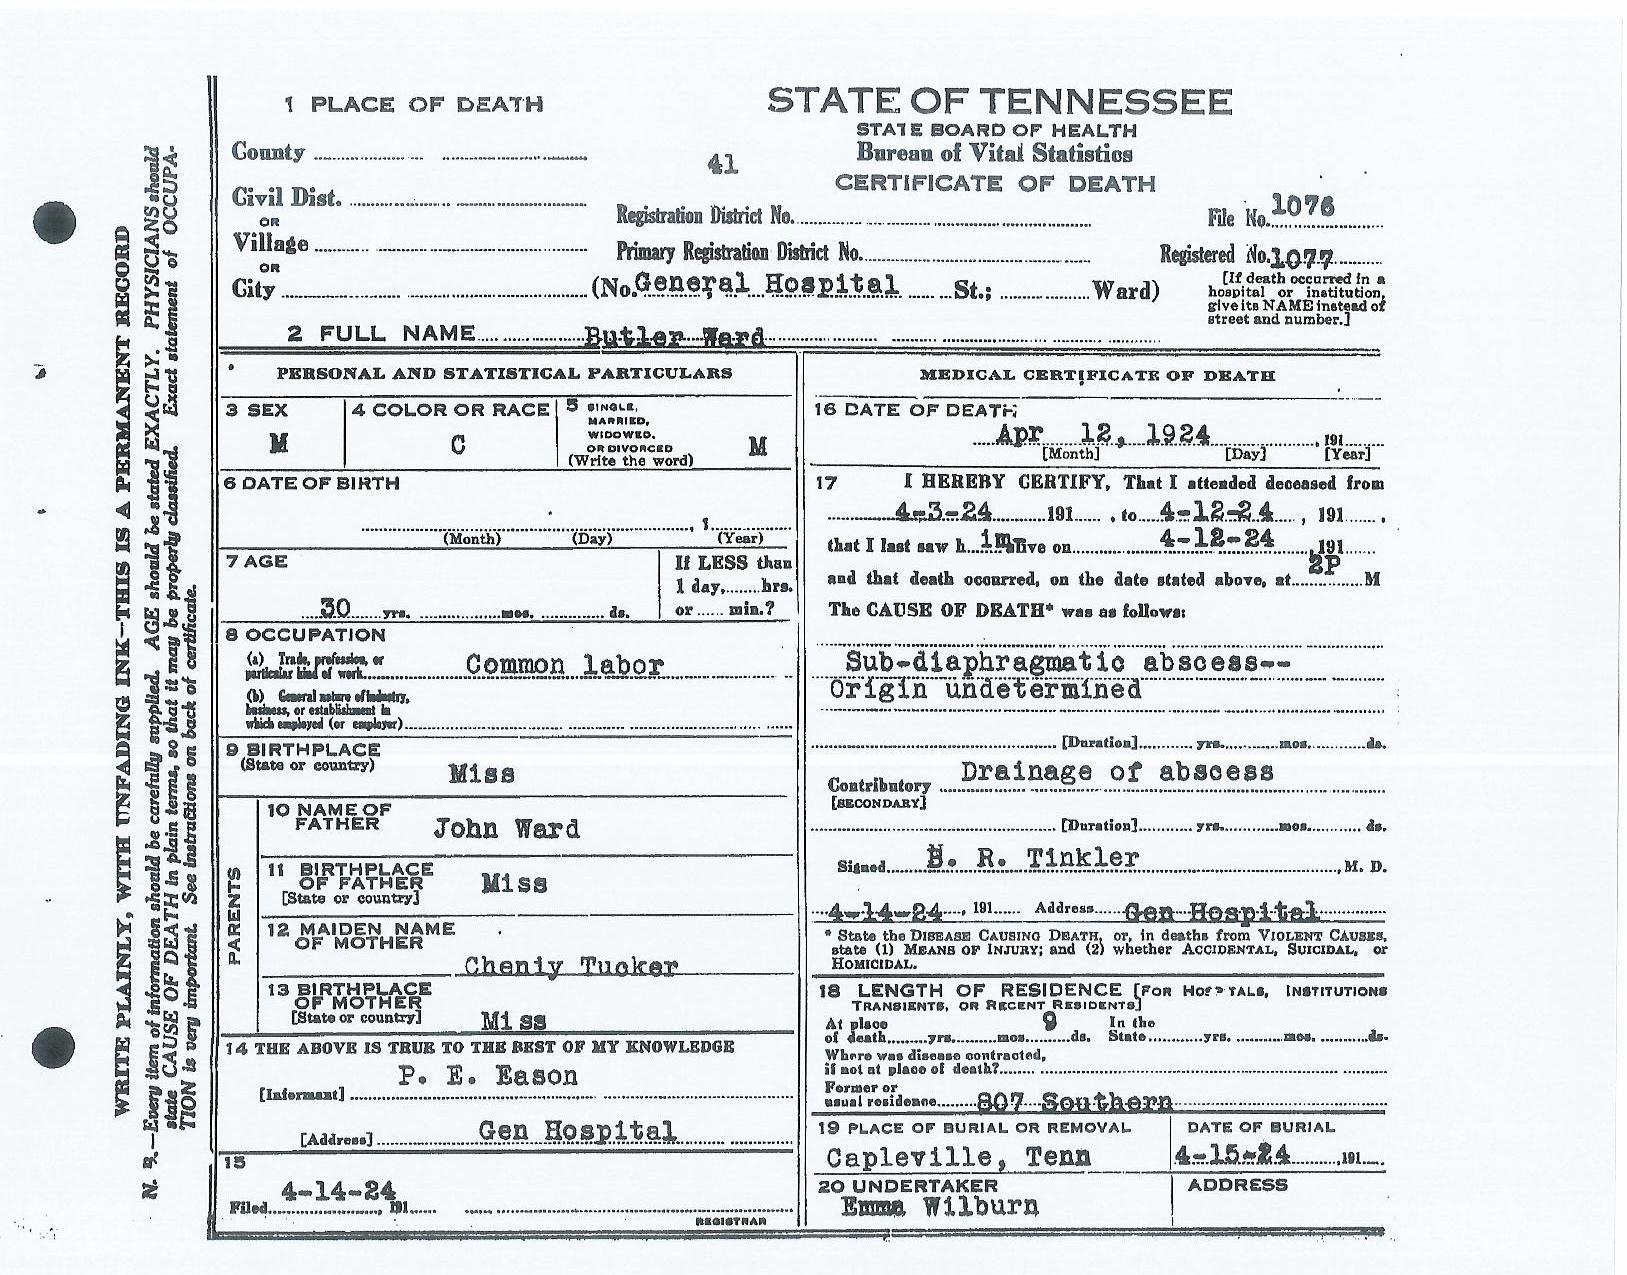 Bulter Ward's Death Certificate.